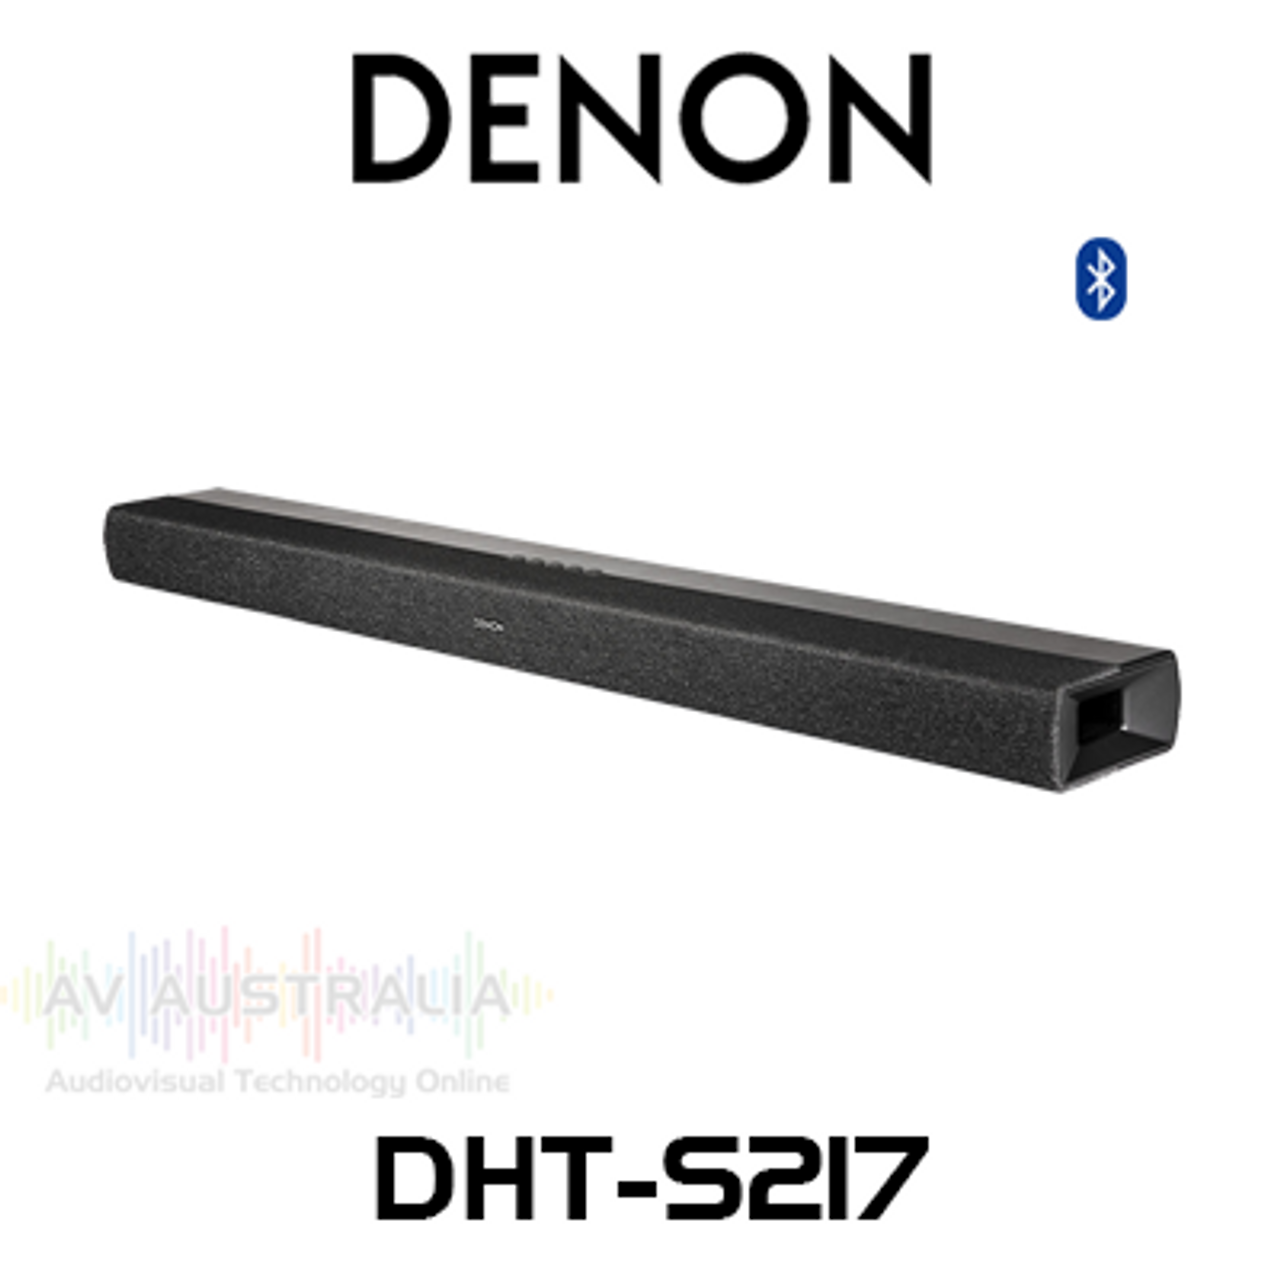 Bluetoothデノン DHT-S217-K BLACK